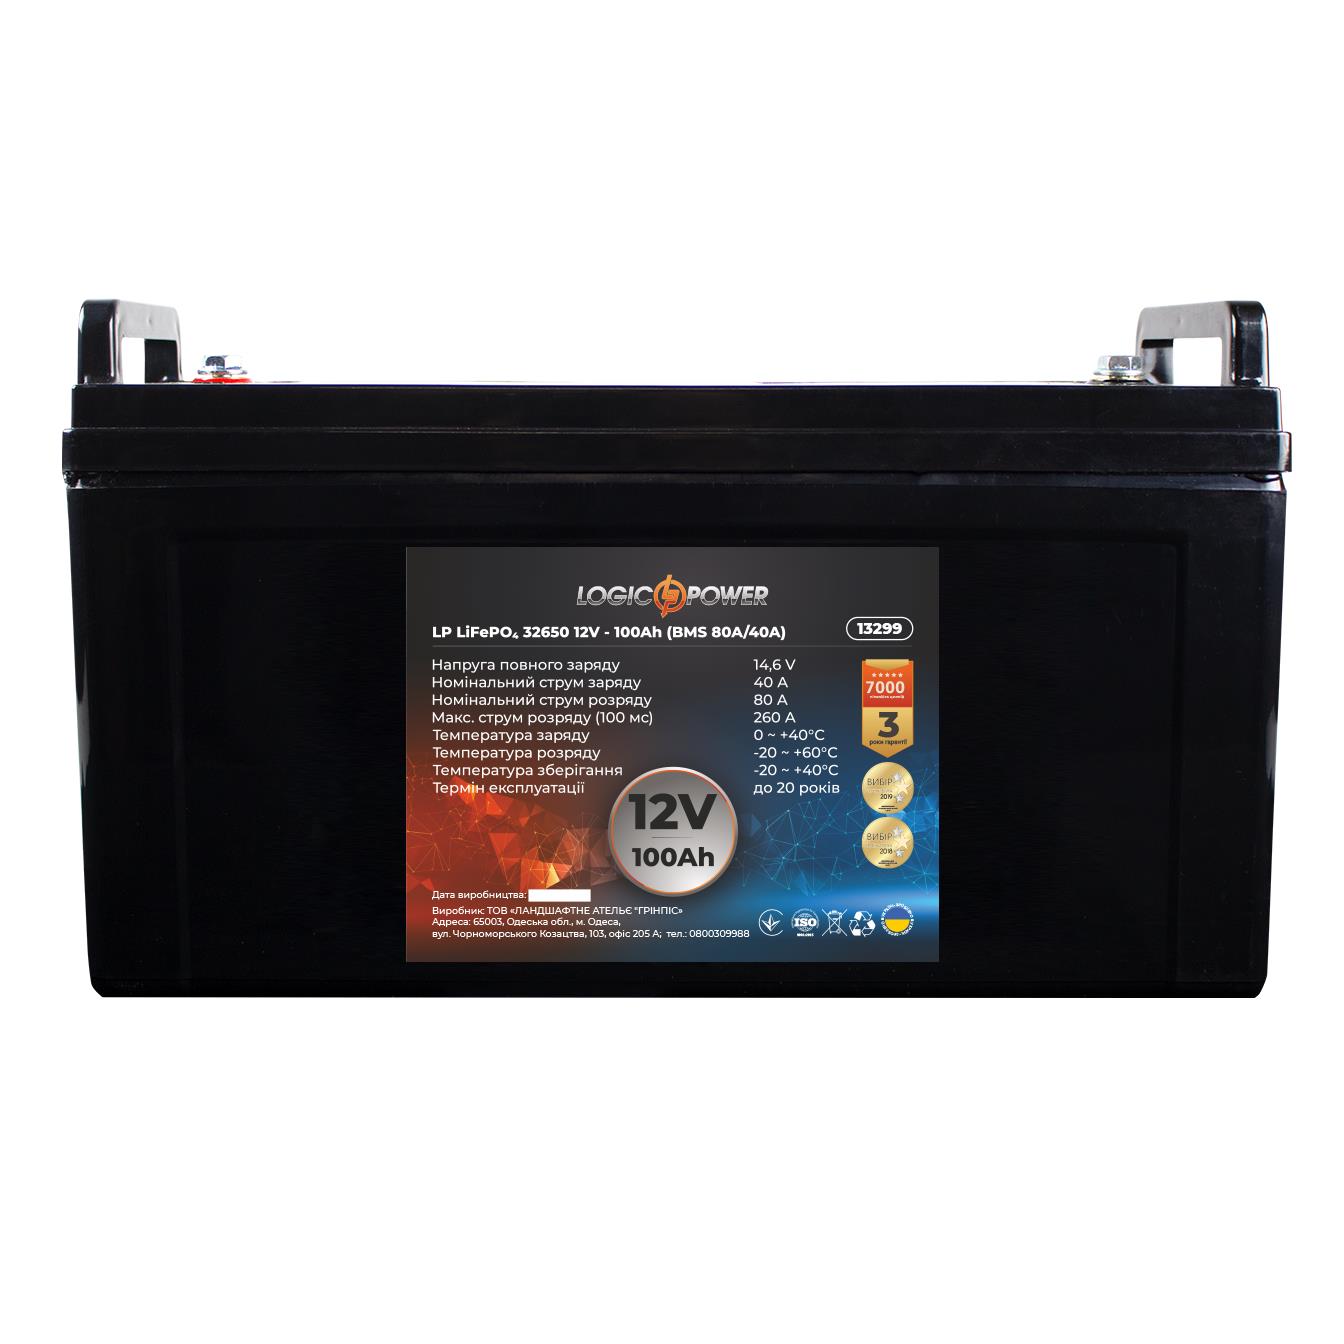 Аккумулятор литий-железо-фосфатный LogicPower LP LiFePO4 12V - 100 Ah (BMS 80A/40A) пластик (13299) в интернет-магазине, главное фото